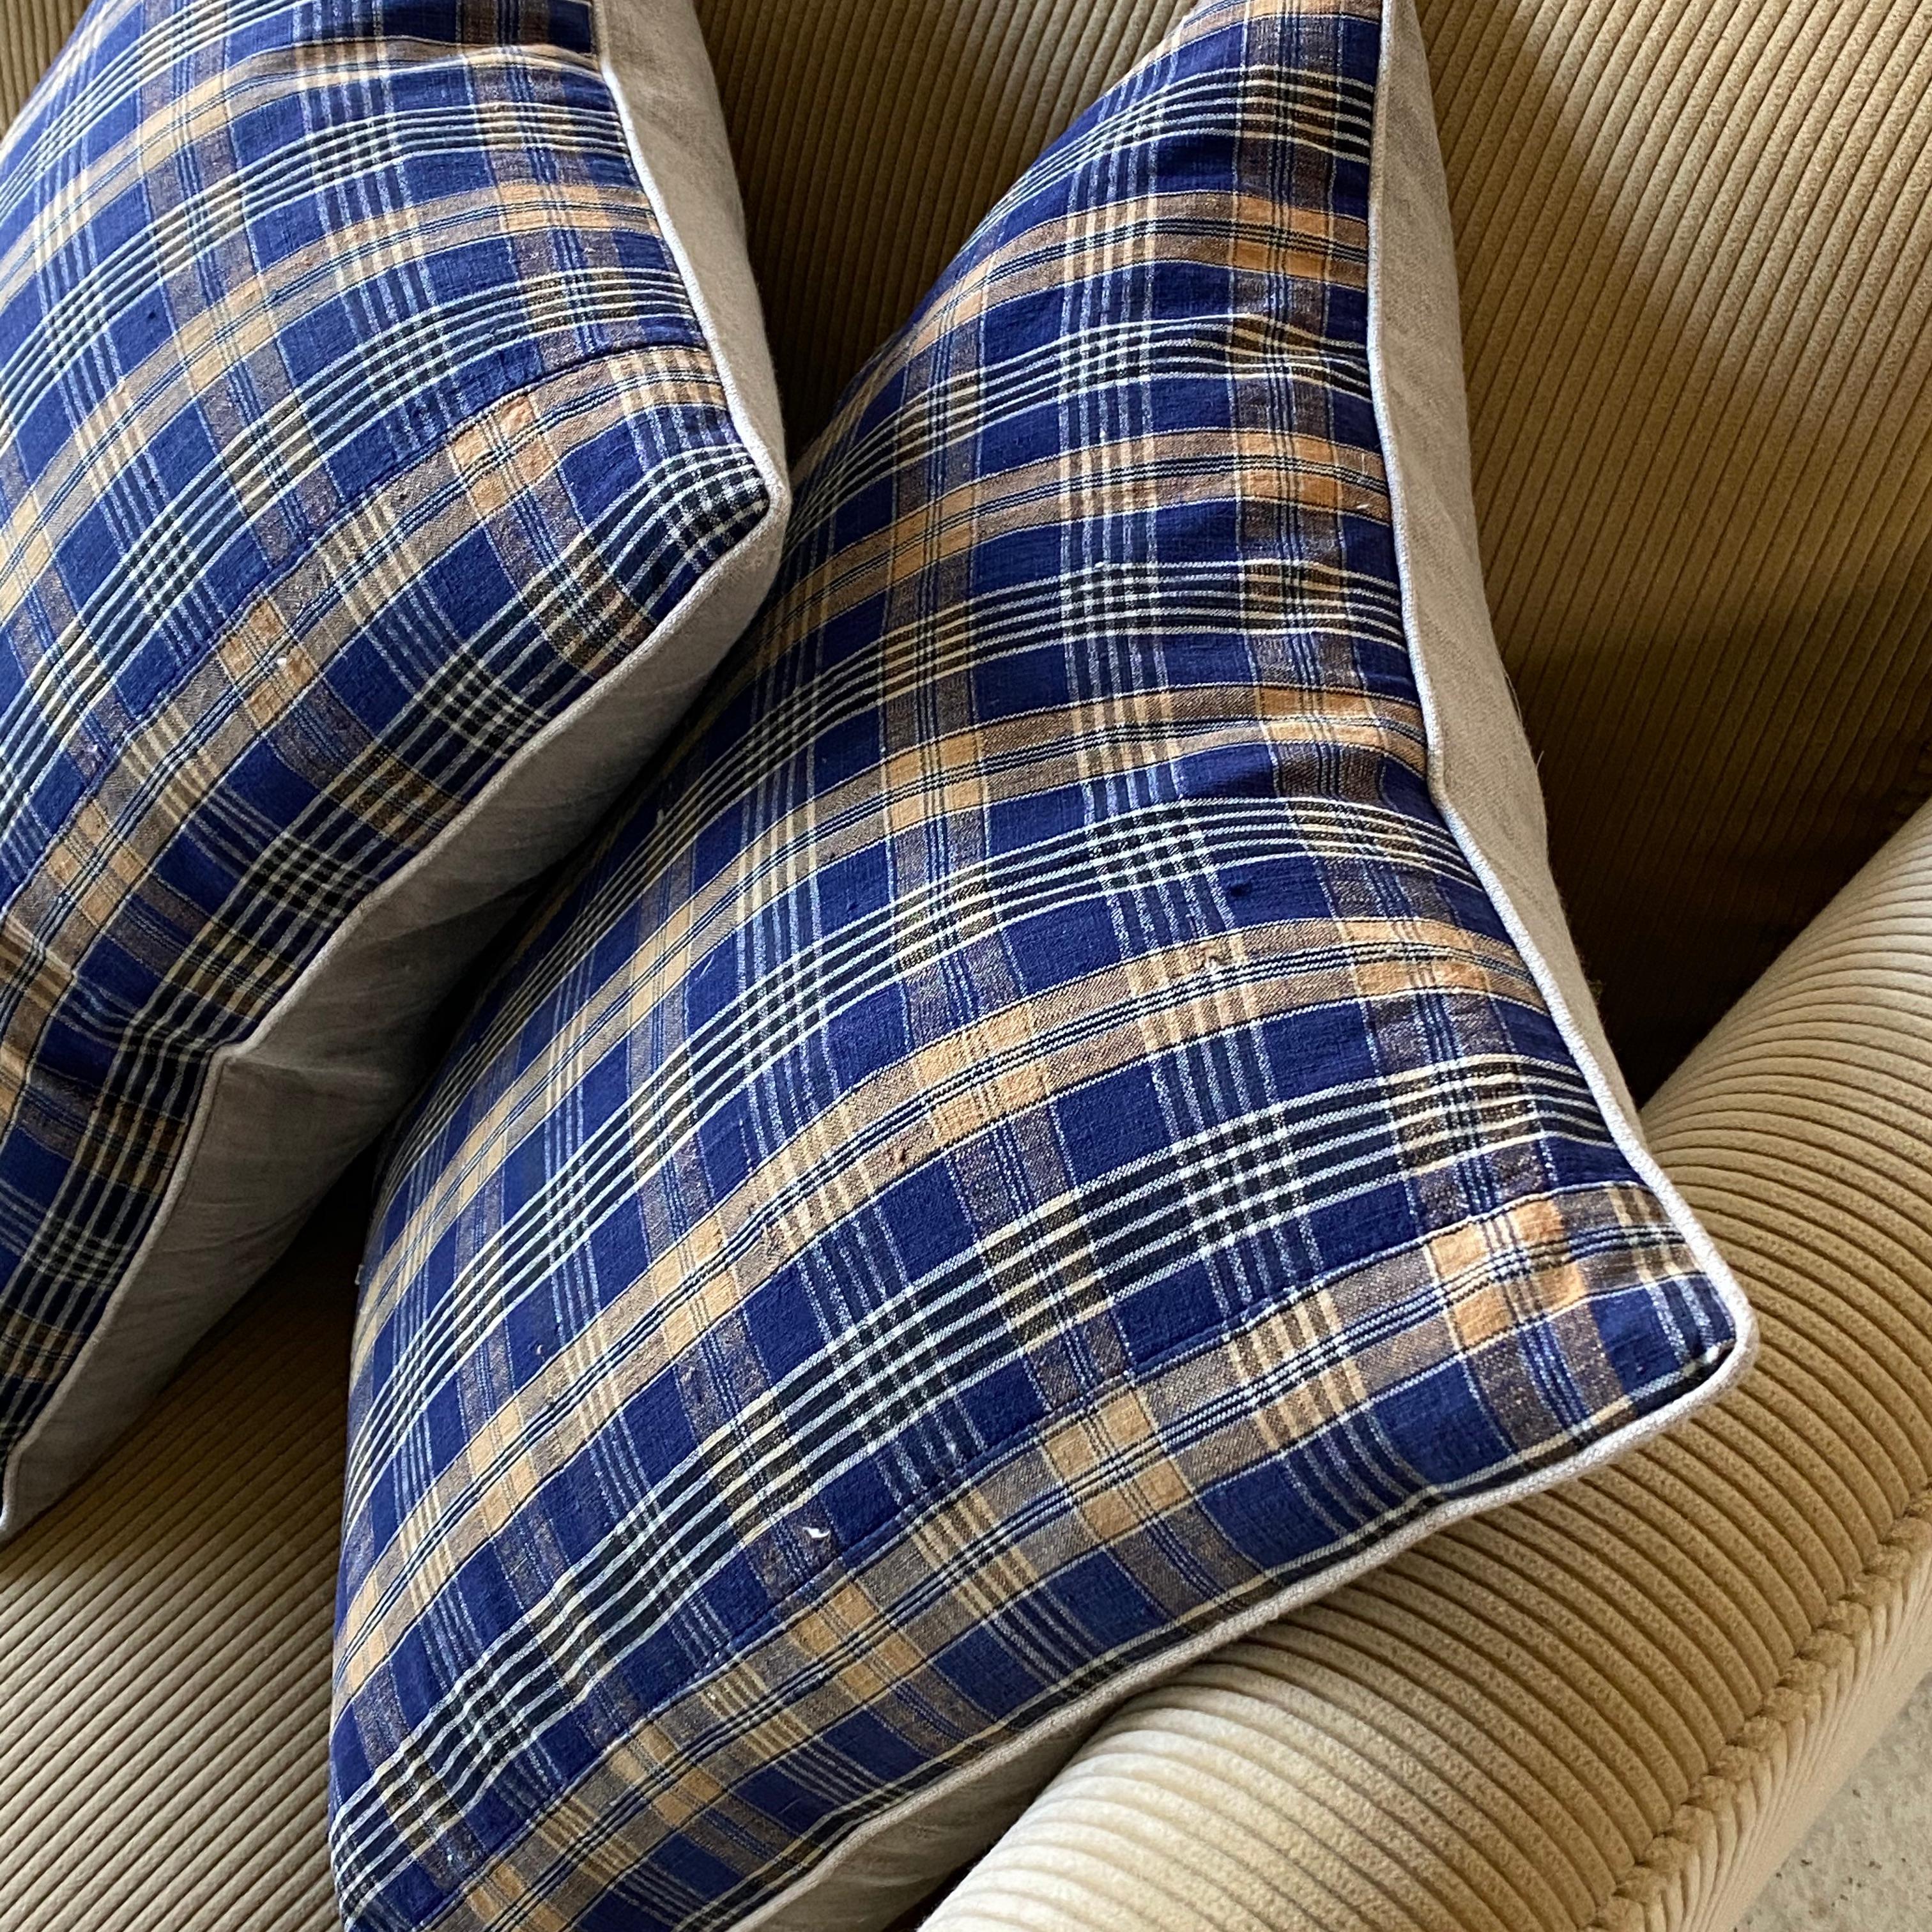 Contemporary Blue and Orange Plaid Madras Pillow Made from Antique Textiles